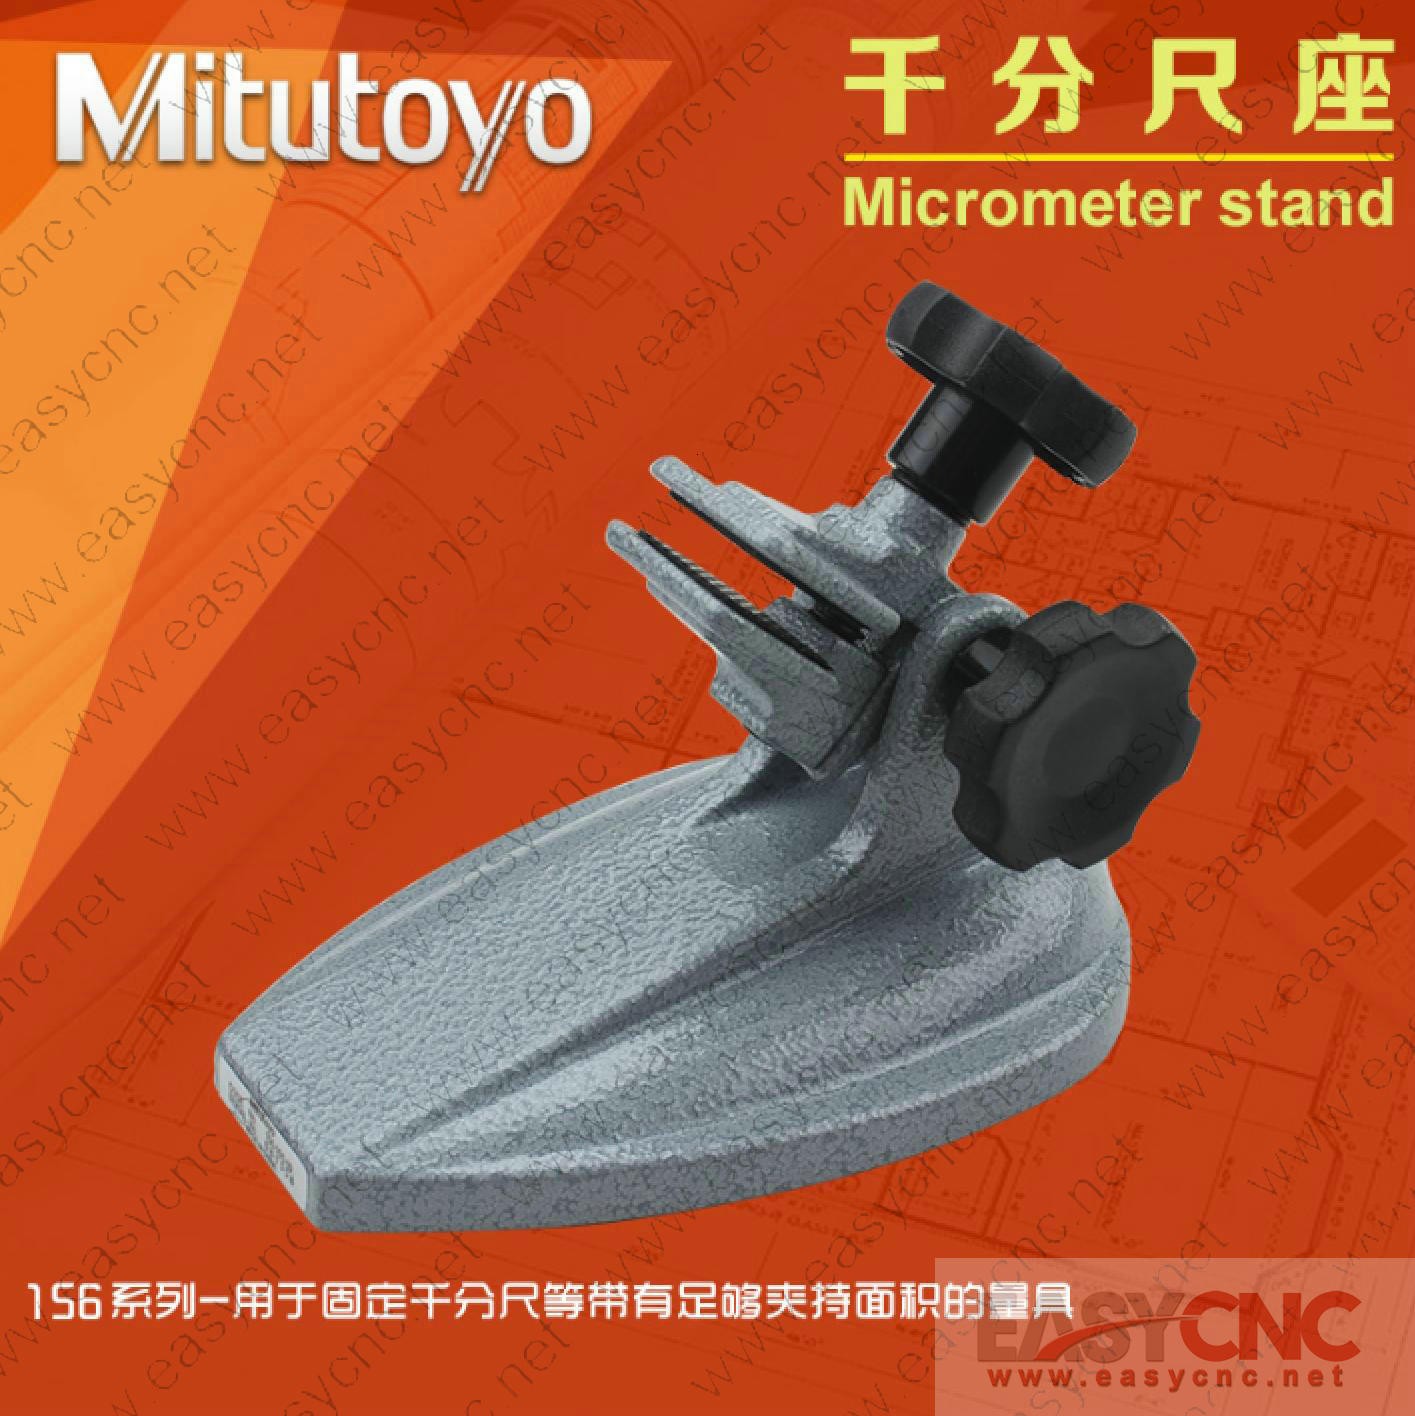 156-101 Mitutoyo micrometer new and original